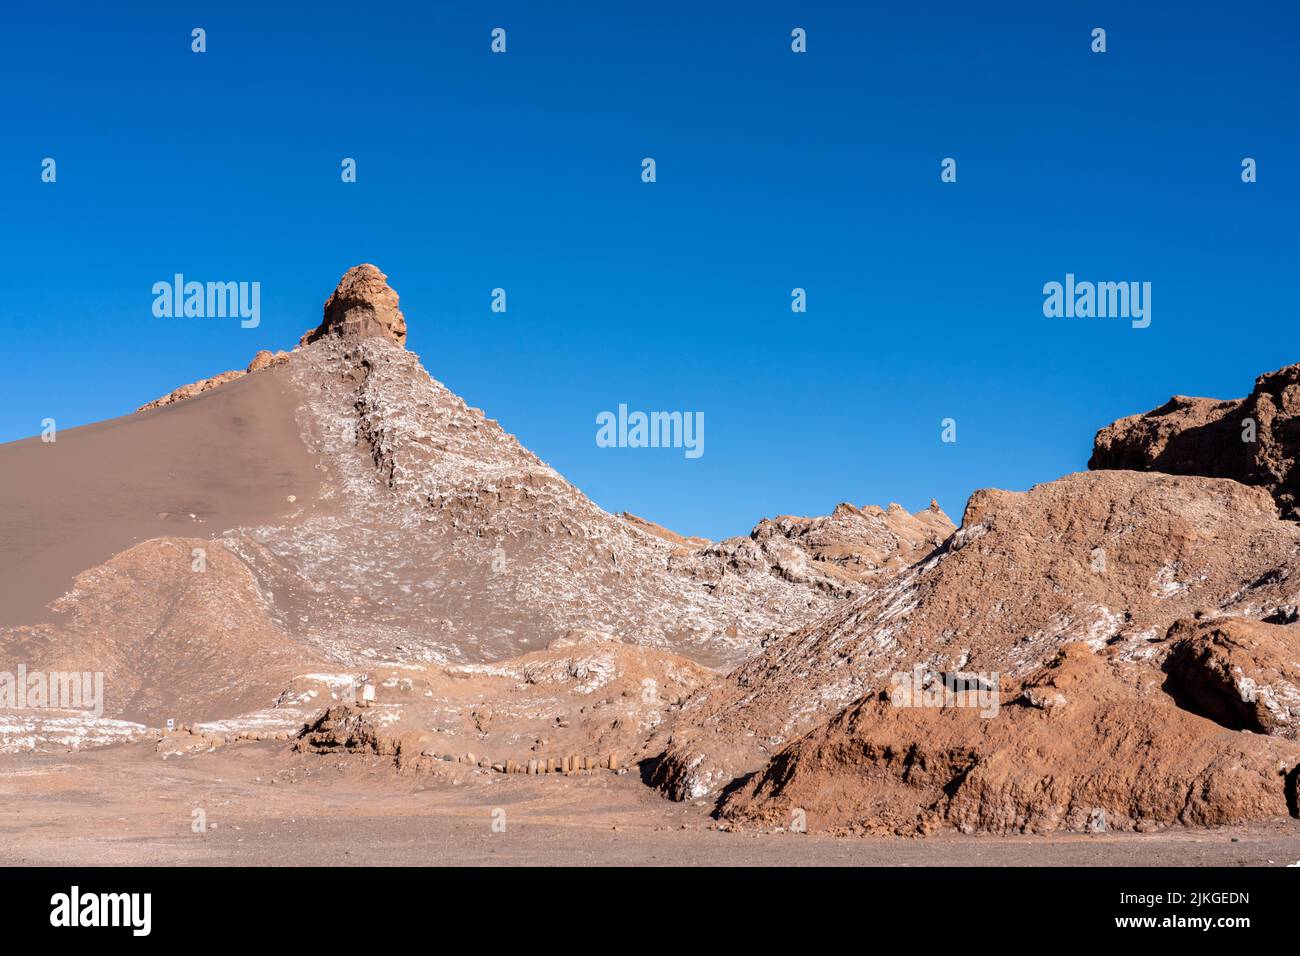 Salt deposits on siltstone rock formations in the Valley of the Moon or Valle de Luna near San Pedro de Atacama, Chile. Stock Photo